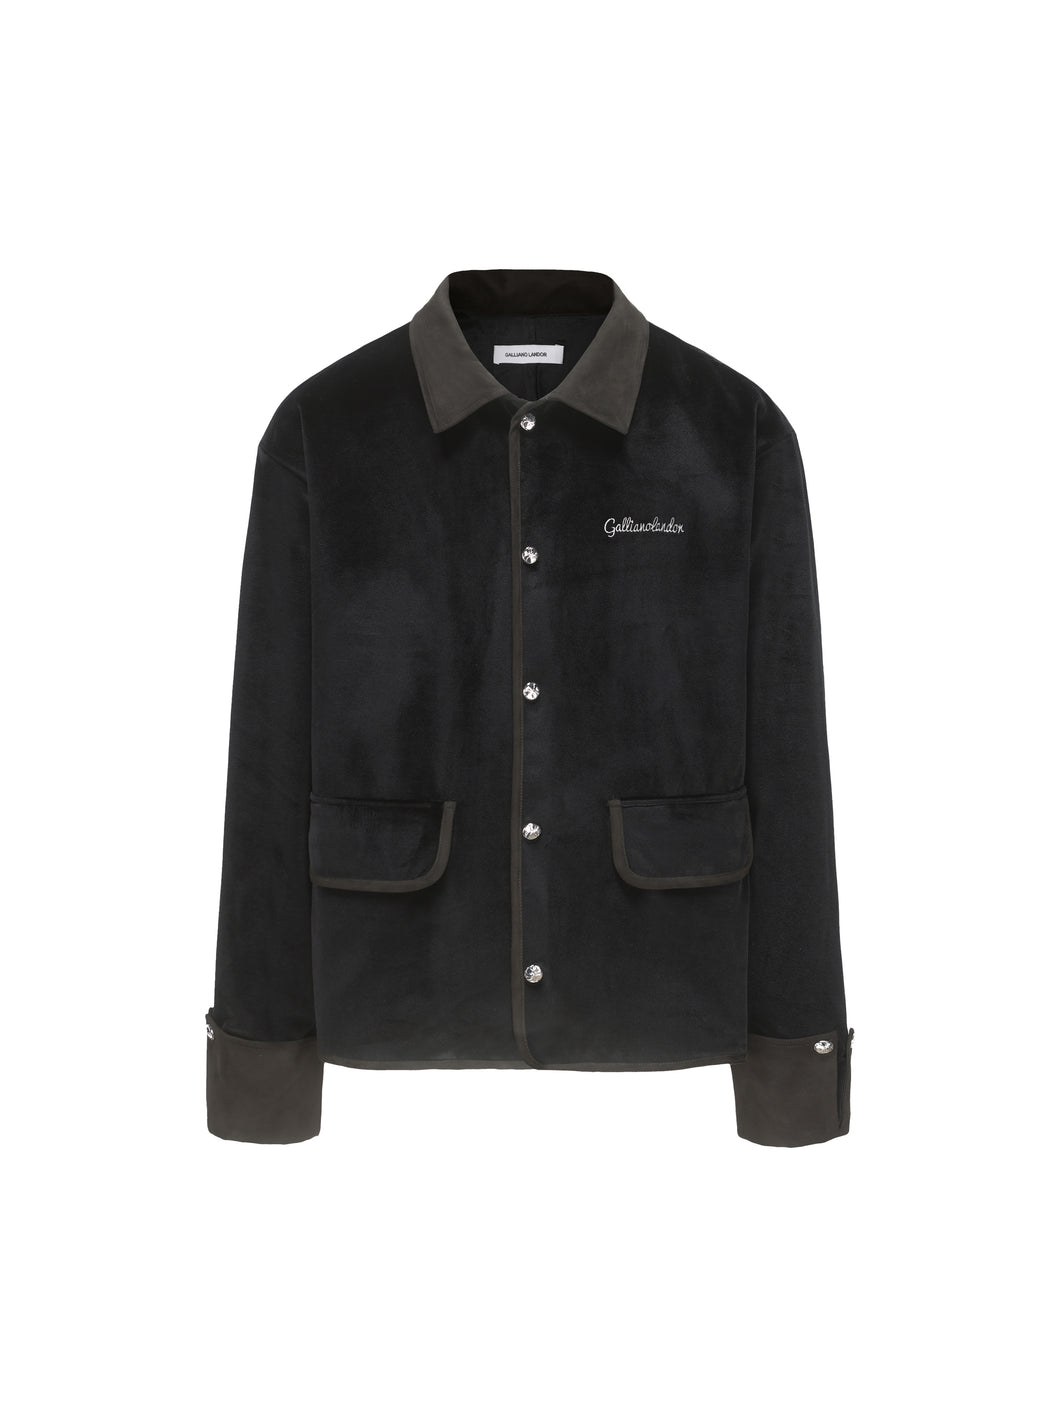 Black Velvet Tang Suit Jacket